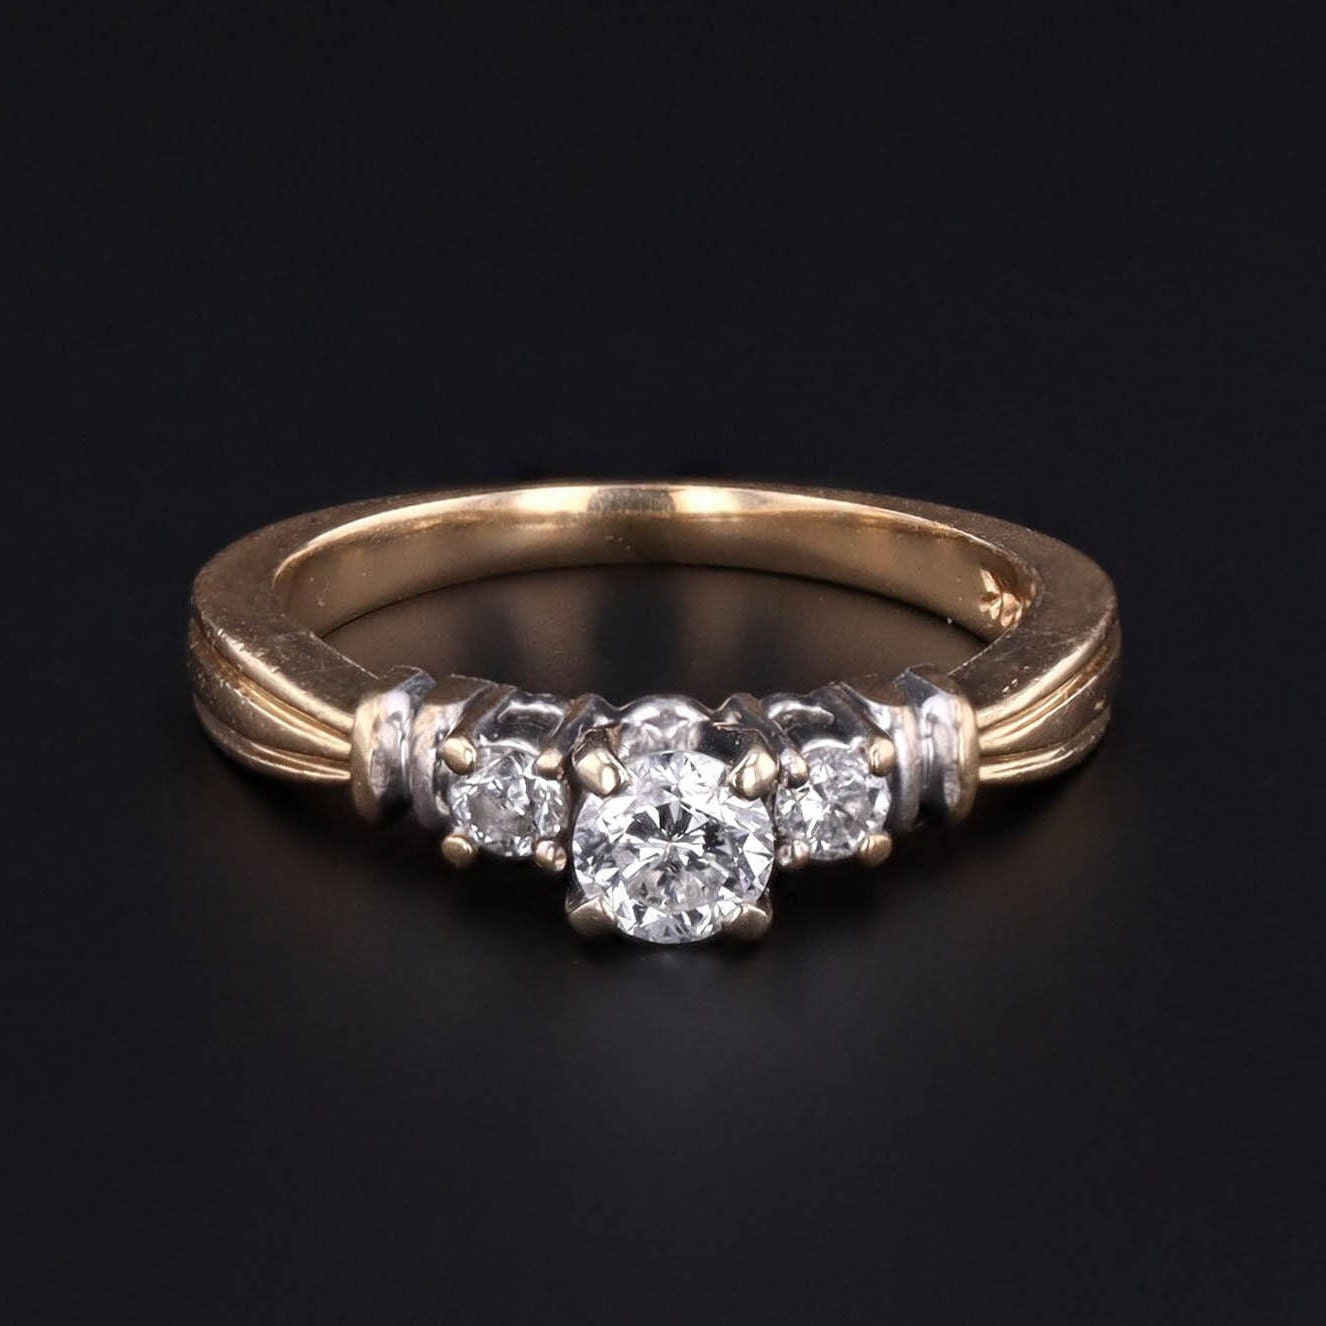 Vintage Diamond Engagement Ring of 14k Gold